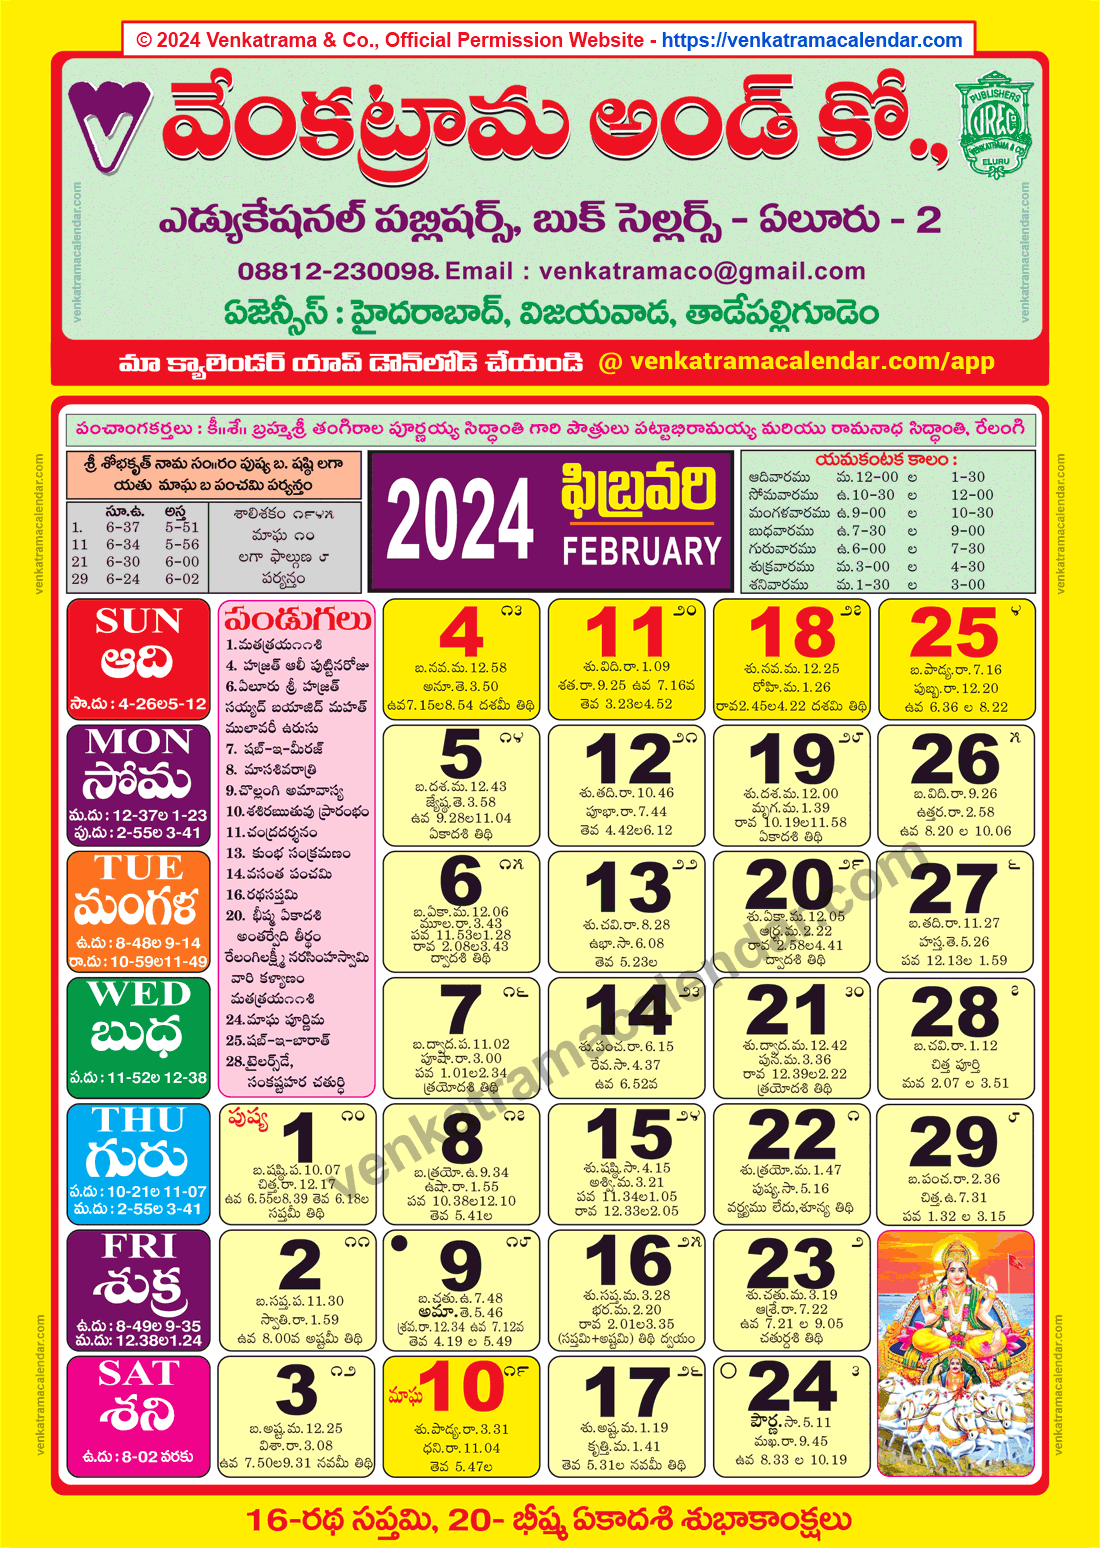 Venkatrama Calendar 2024 February